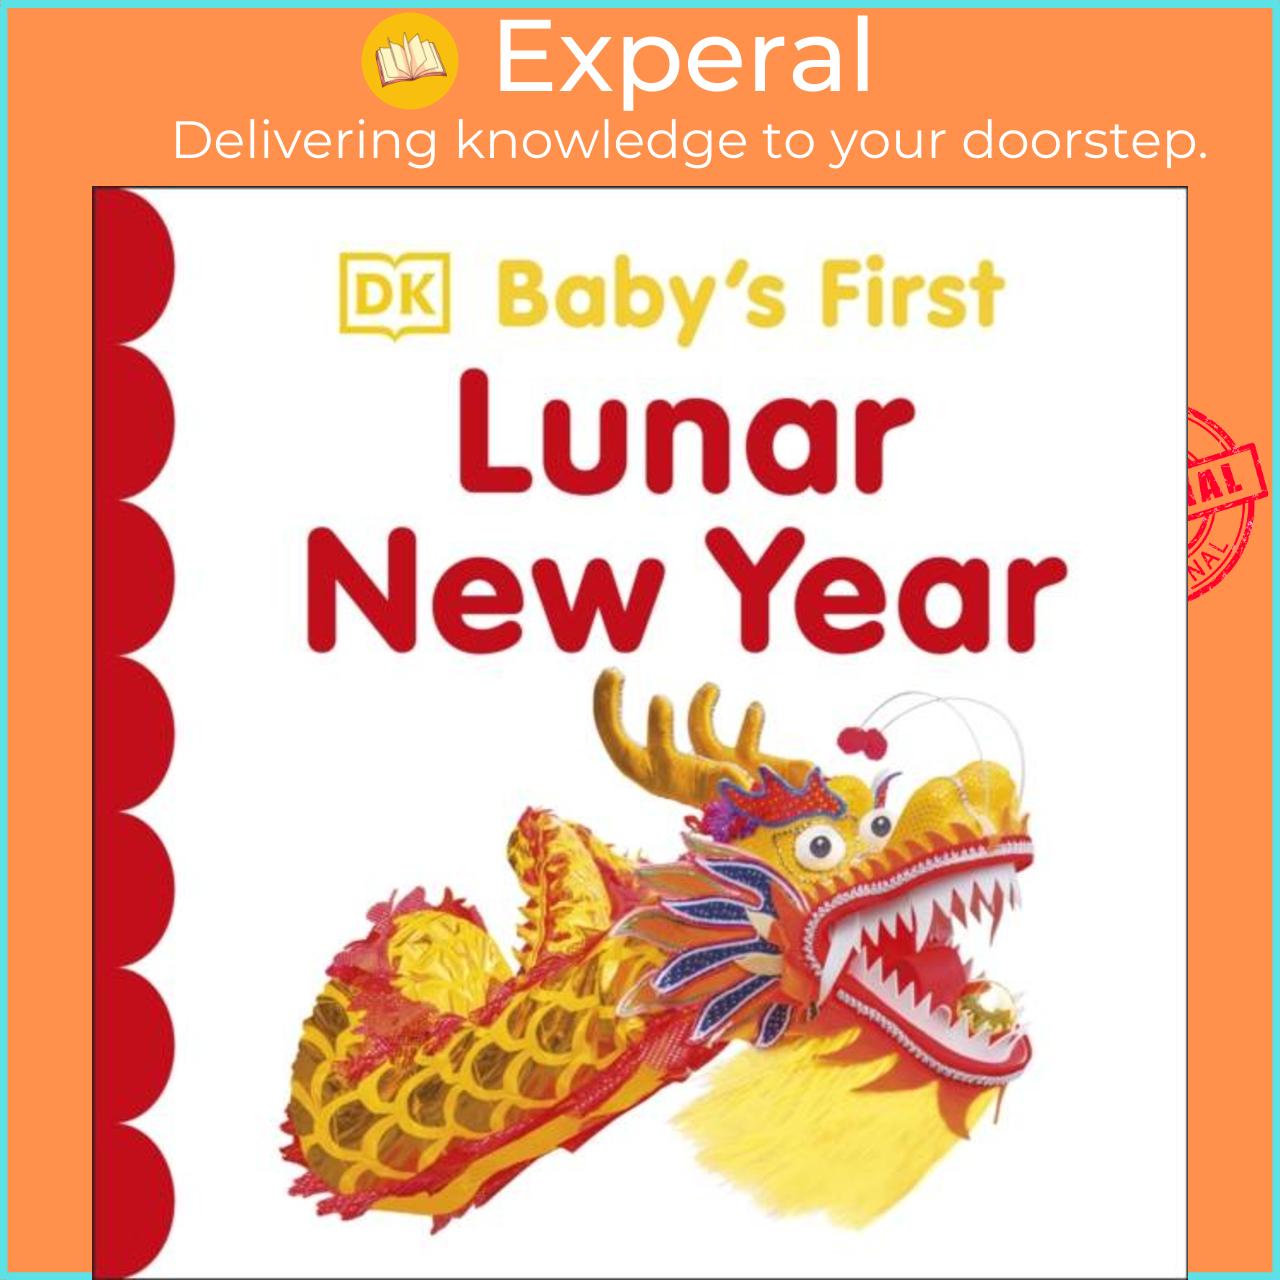 Sách - Baby's First Lunar New Year by DK (UK edition, boardbook)